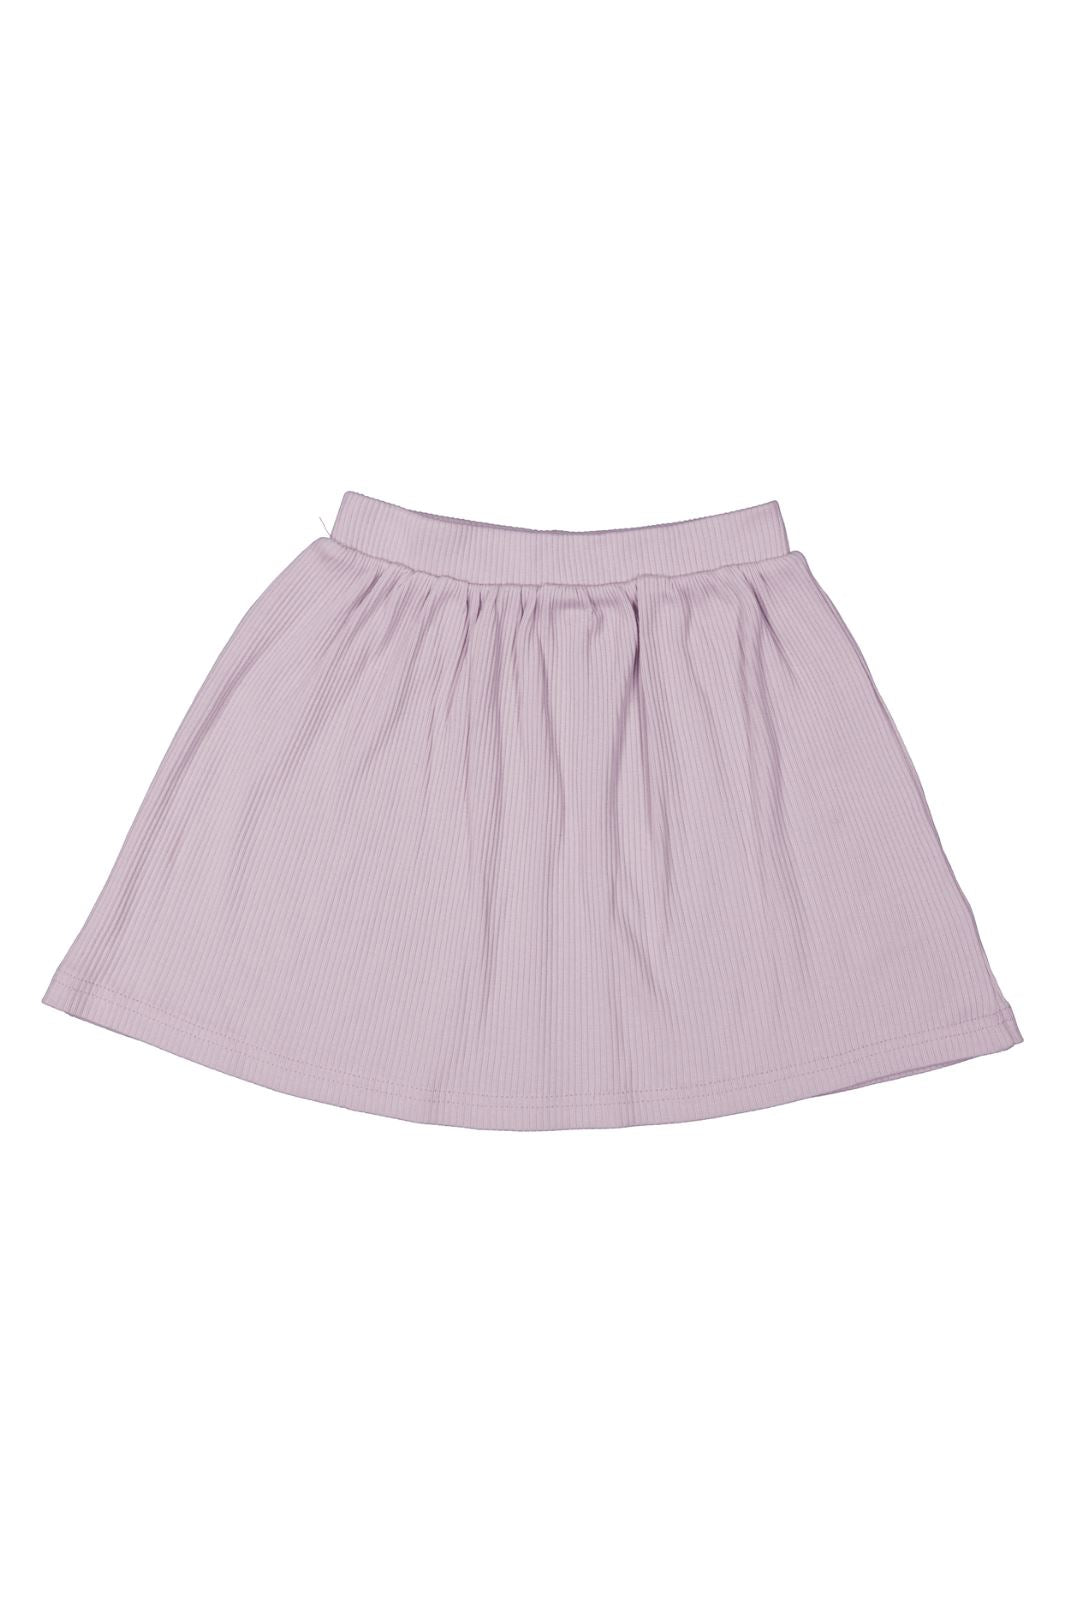 MarMar - Skirt - Lilac Bloom 0437 Nederdele 